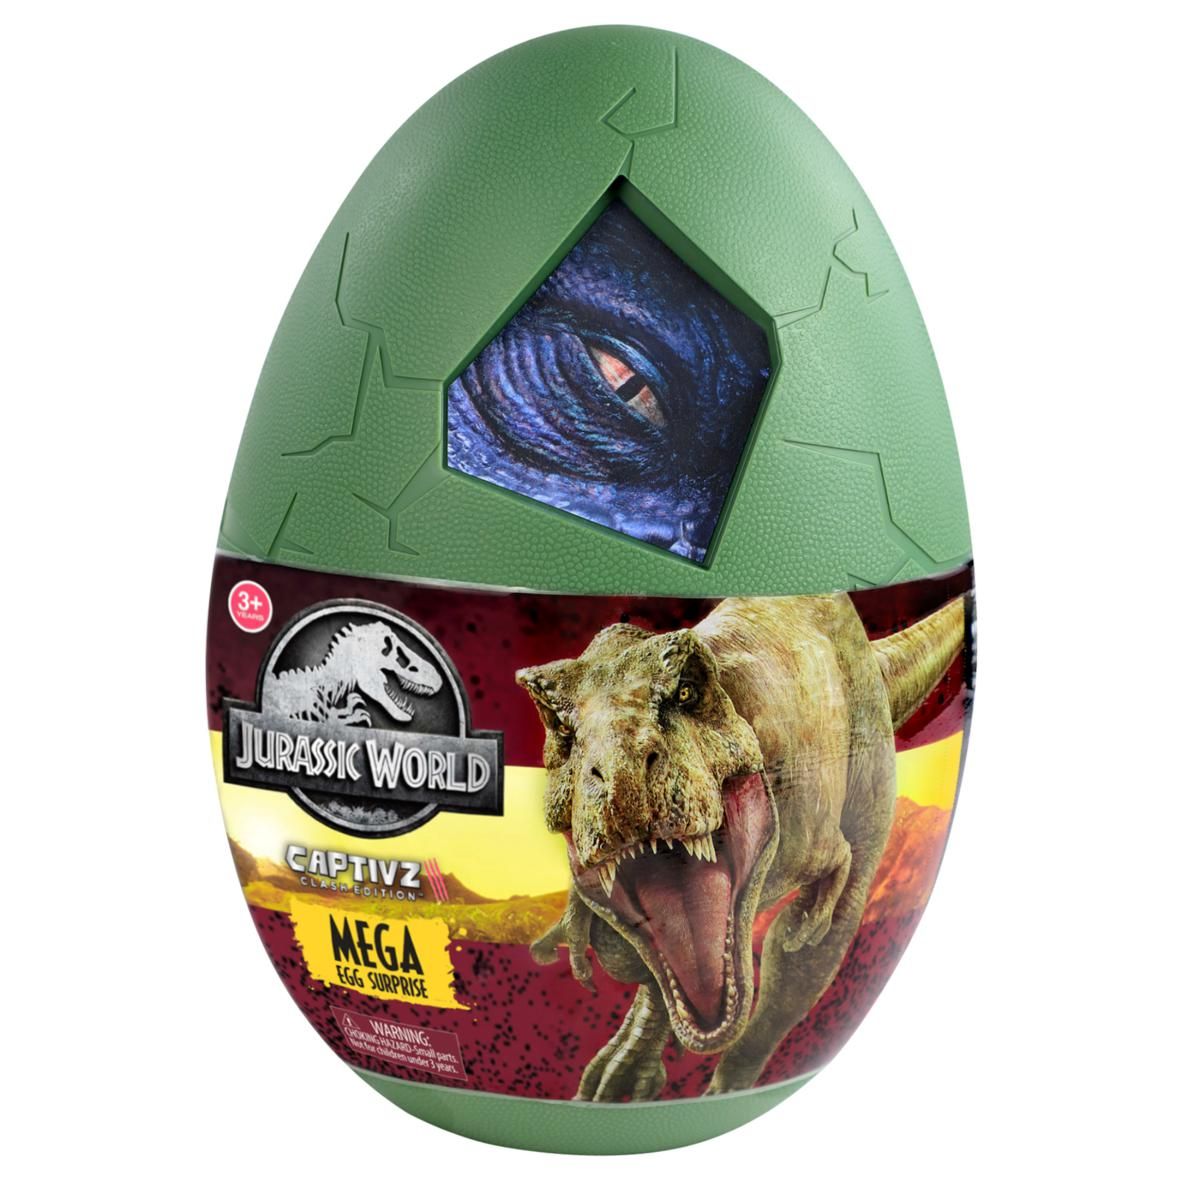 Jurassic World CAPTIVZ Clash Edition Mega Egg Surprise Toy - 20490820 | HSN | HSN